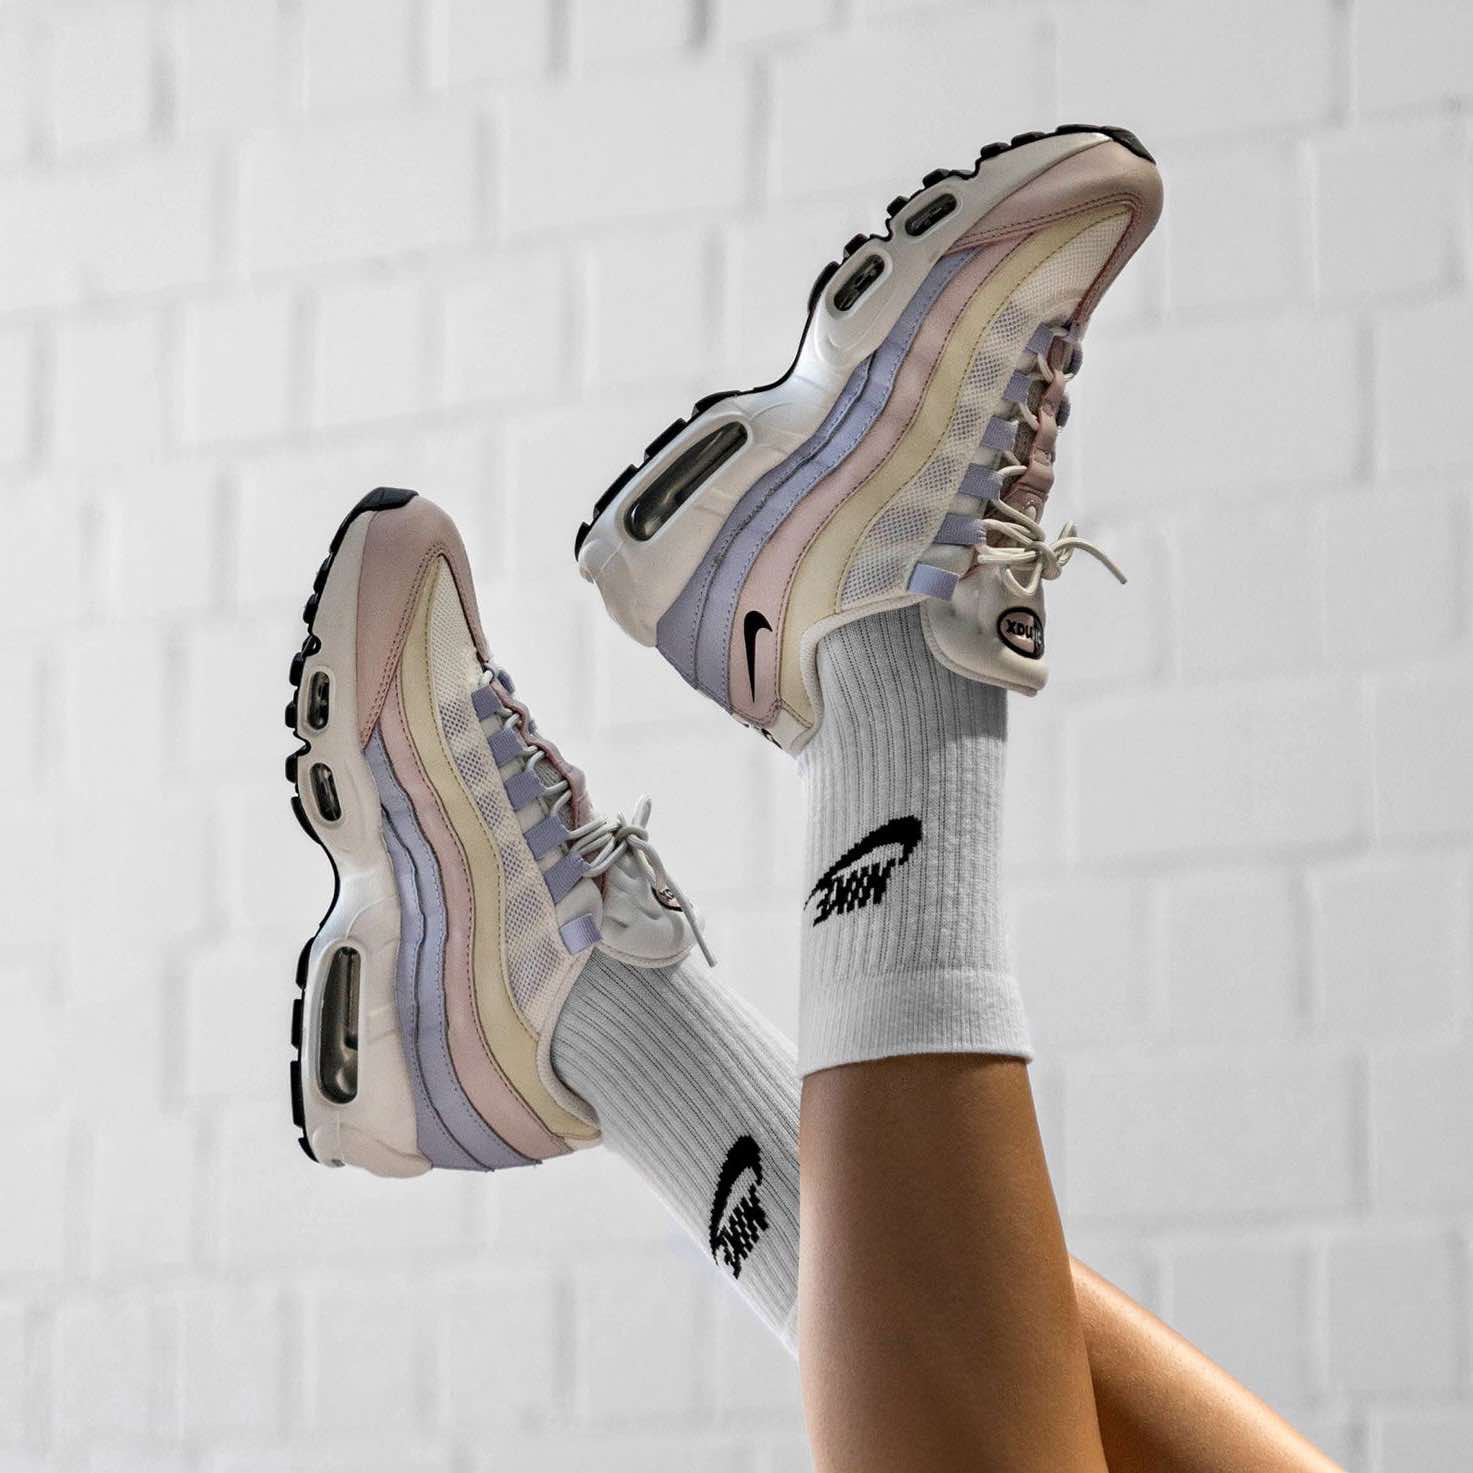 Inside Sneakers on Twitter: "Nike Women's Air Max 95 « Barely Rose »  https://t.co/GxOTNKAkCH Credit : Asphaltgold — #nike #airmax #sneakerhead  #sneakersaddict #sneakers #kicks #footwear #shoes #fashion #style  https://t.co/0YQ3nTItVu" / Twitter